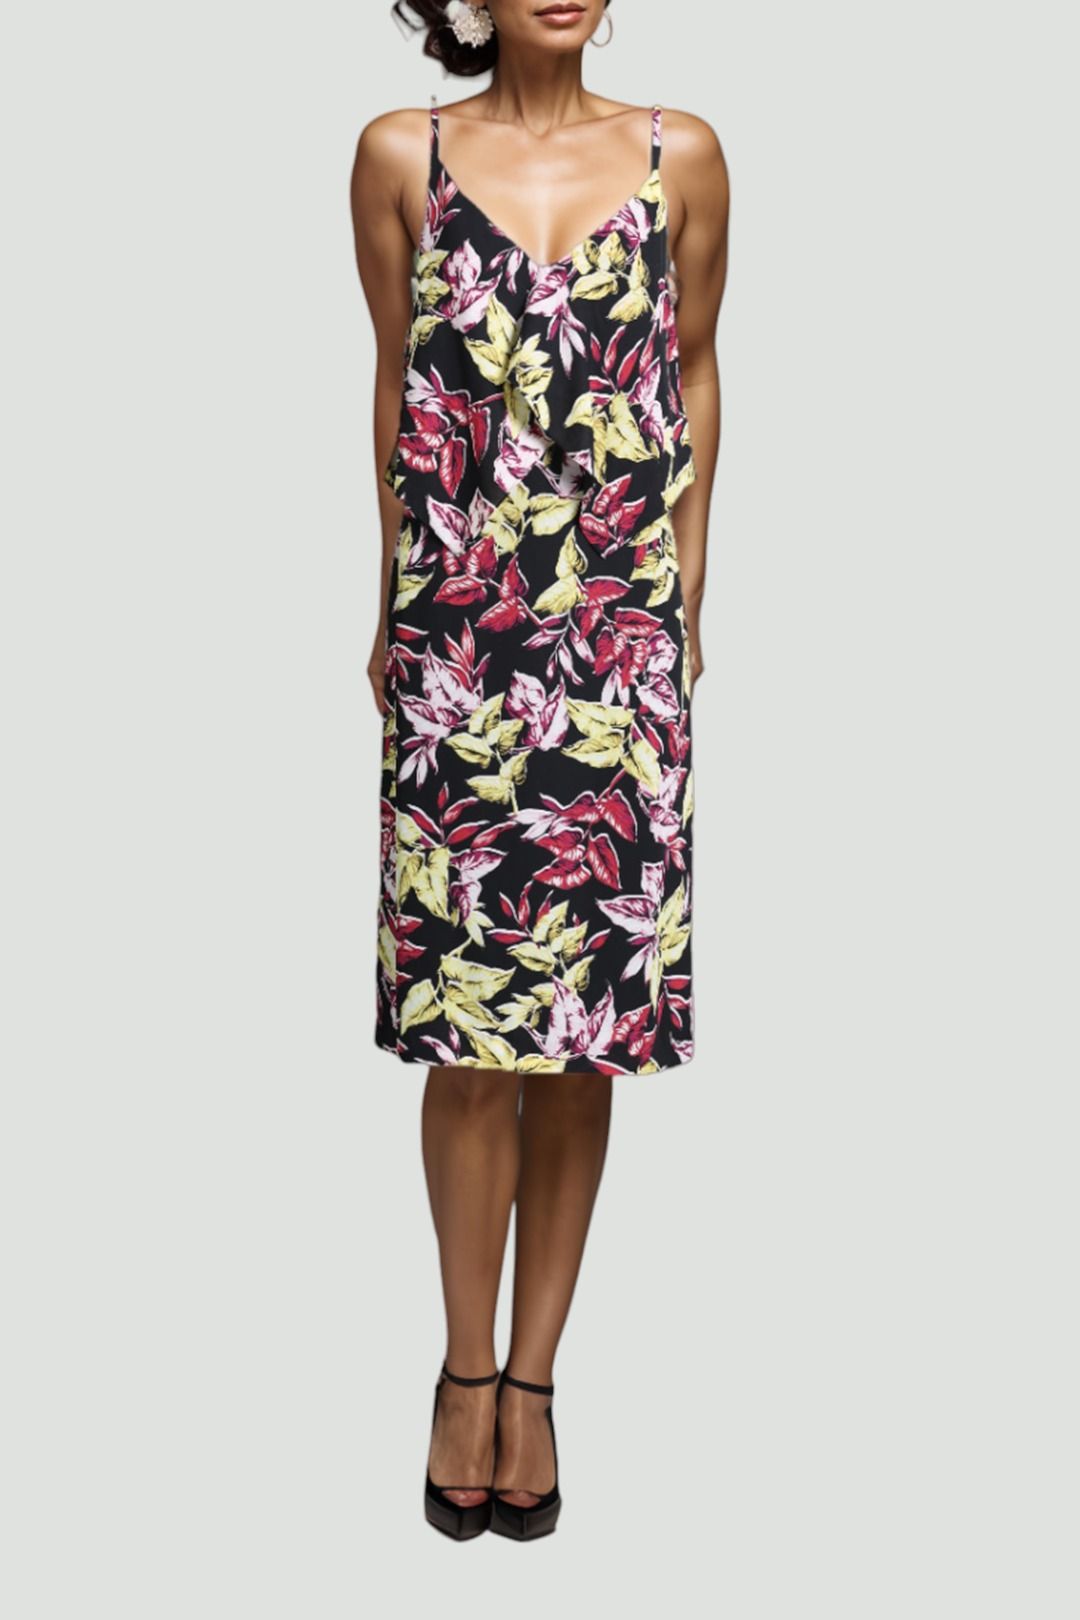 Veronika Maine - Floral Summer Strap Dress